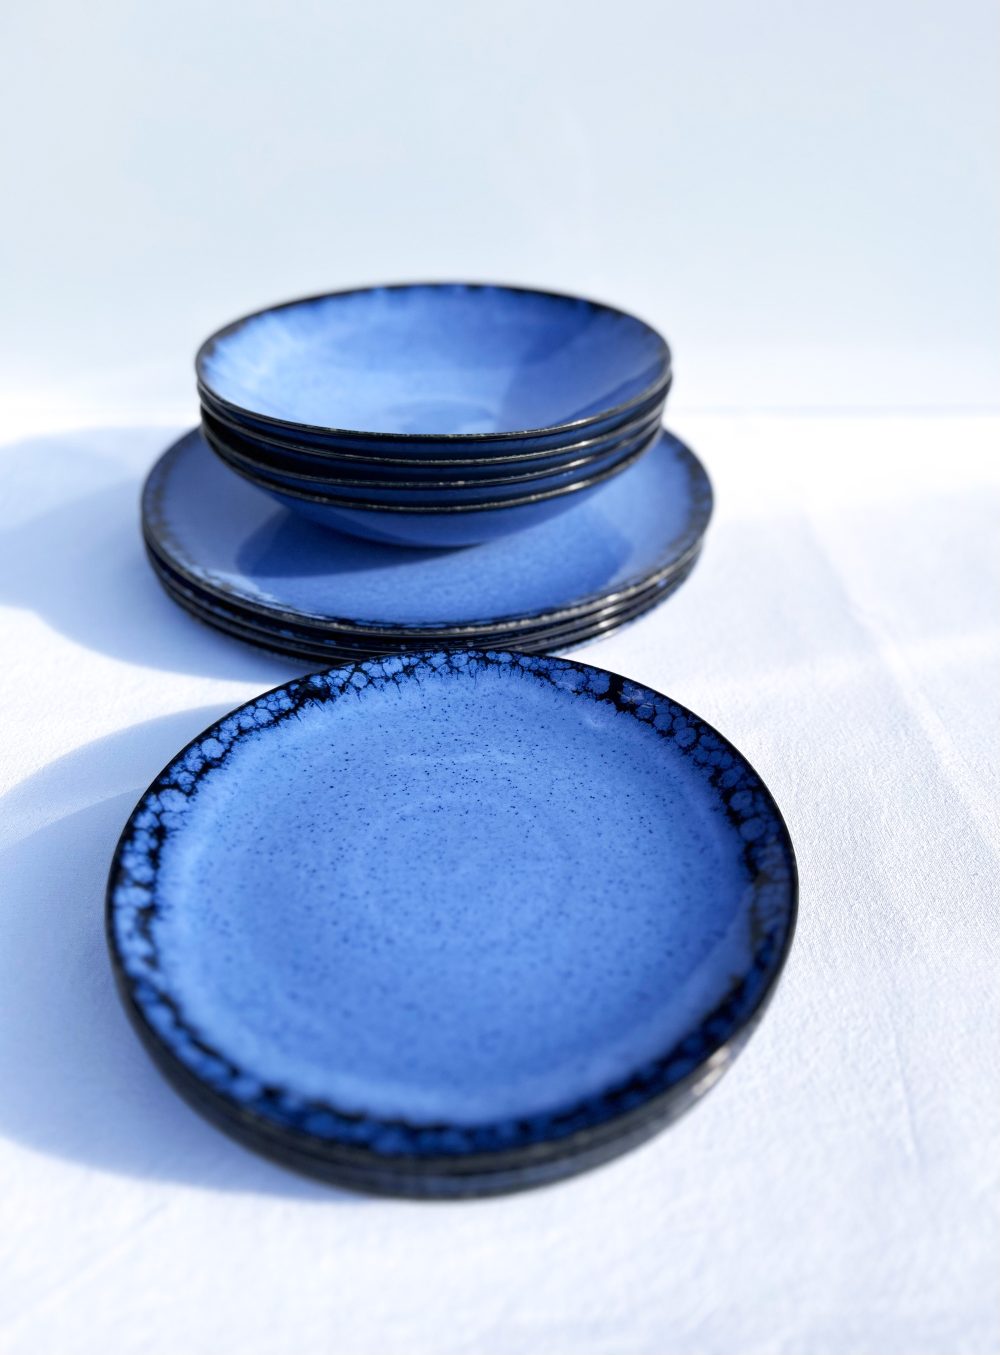 blauwe serviesset pastaborden - amazonia blue -handgemaakt keramiek - modern portugees blauw servies bij UNRO